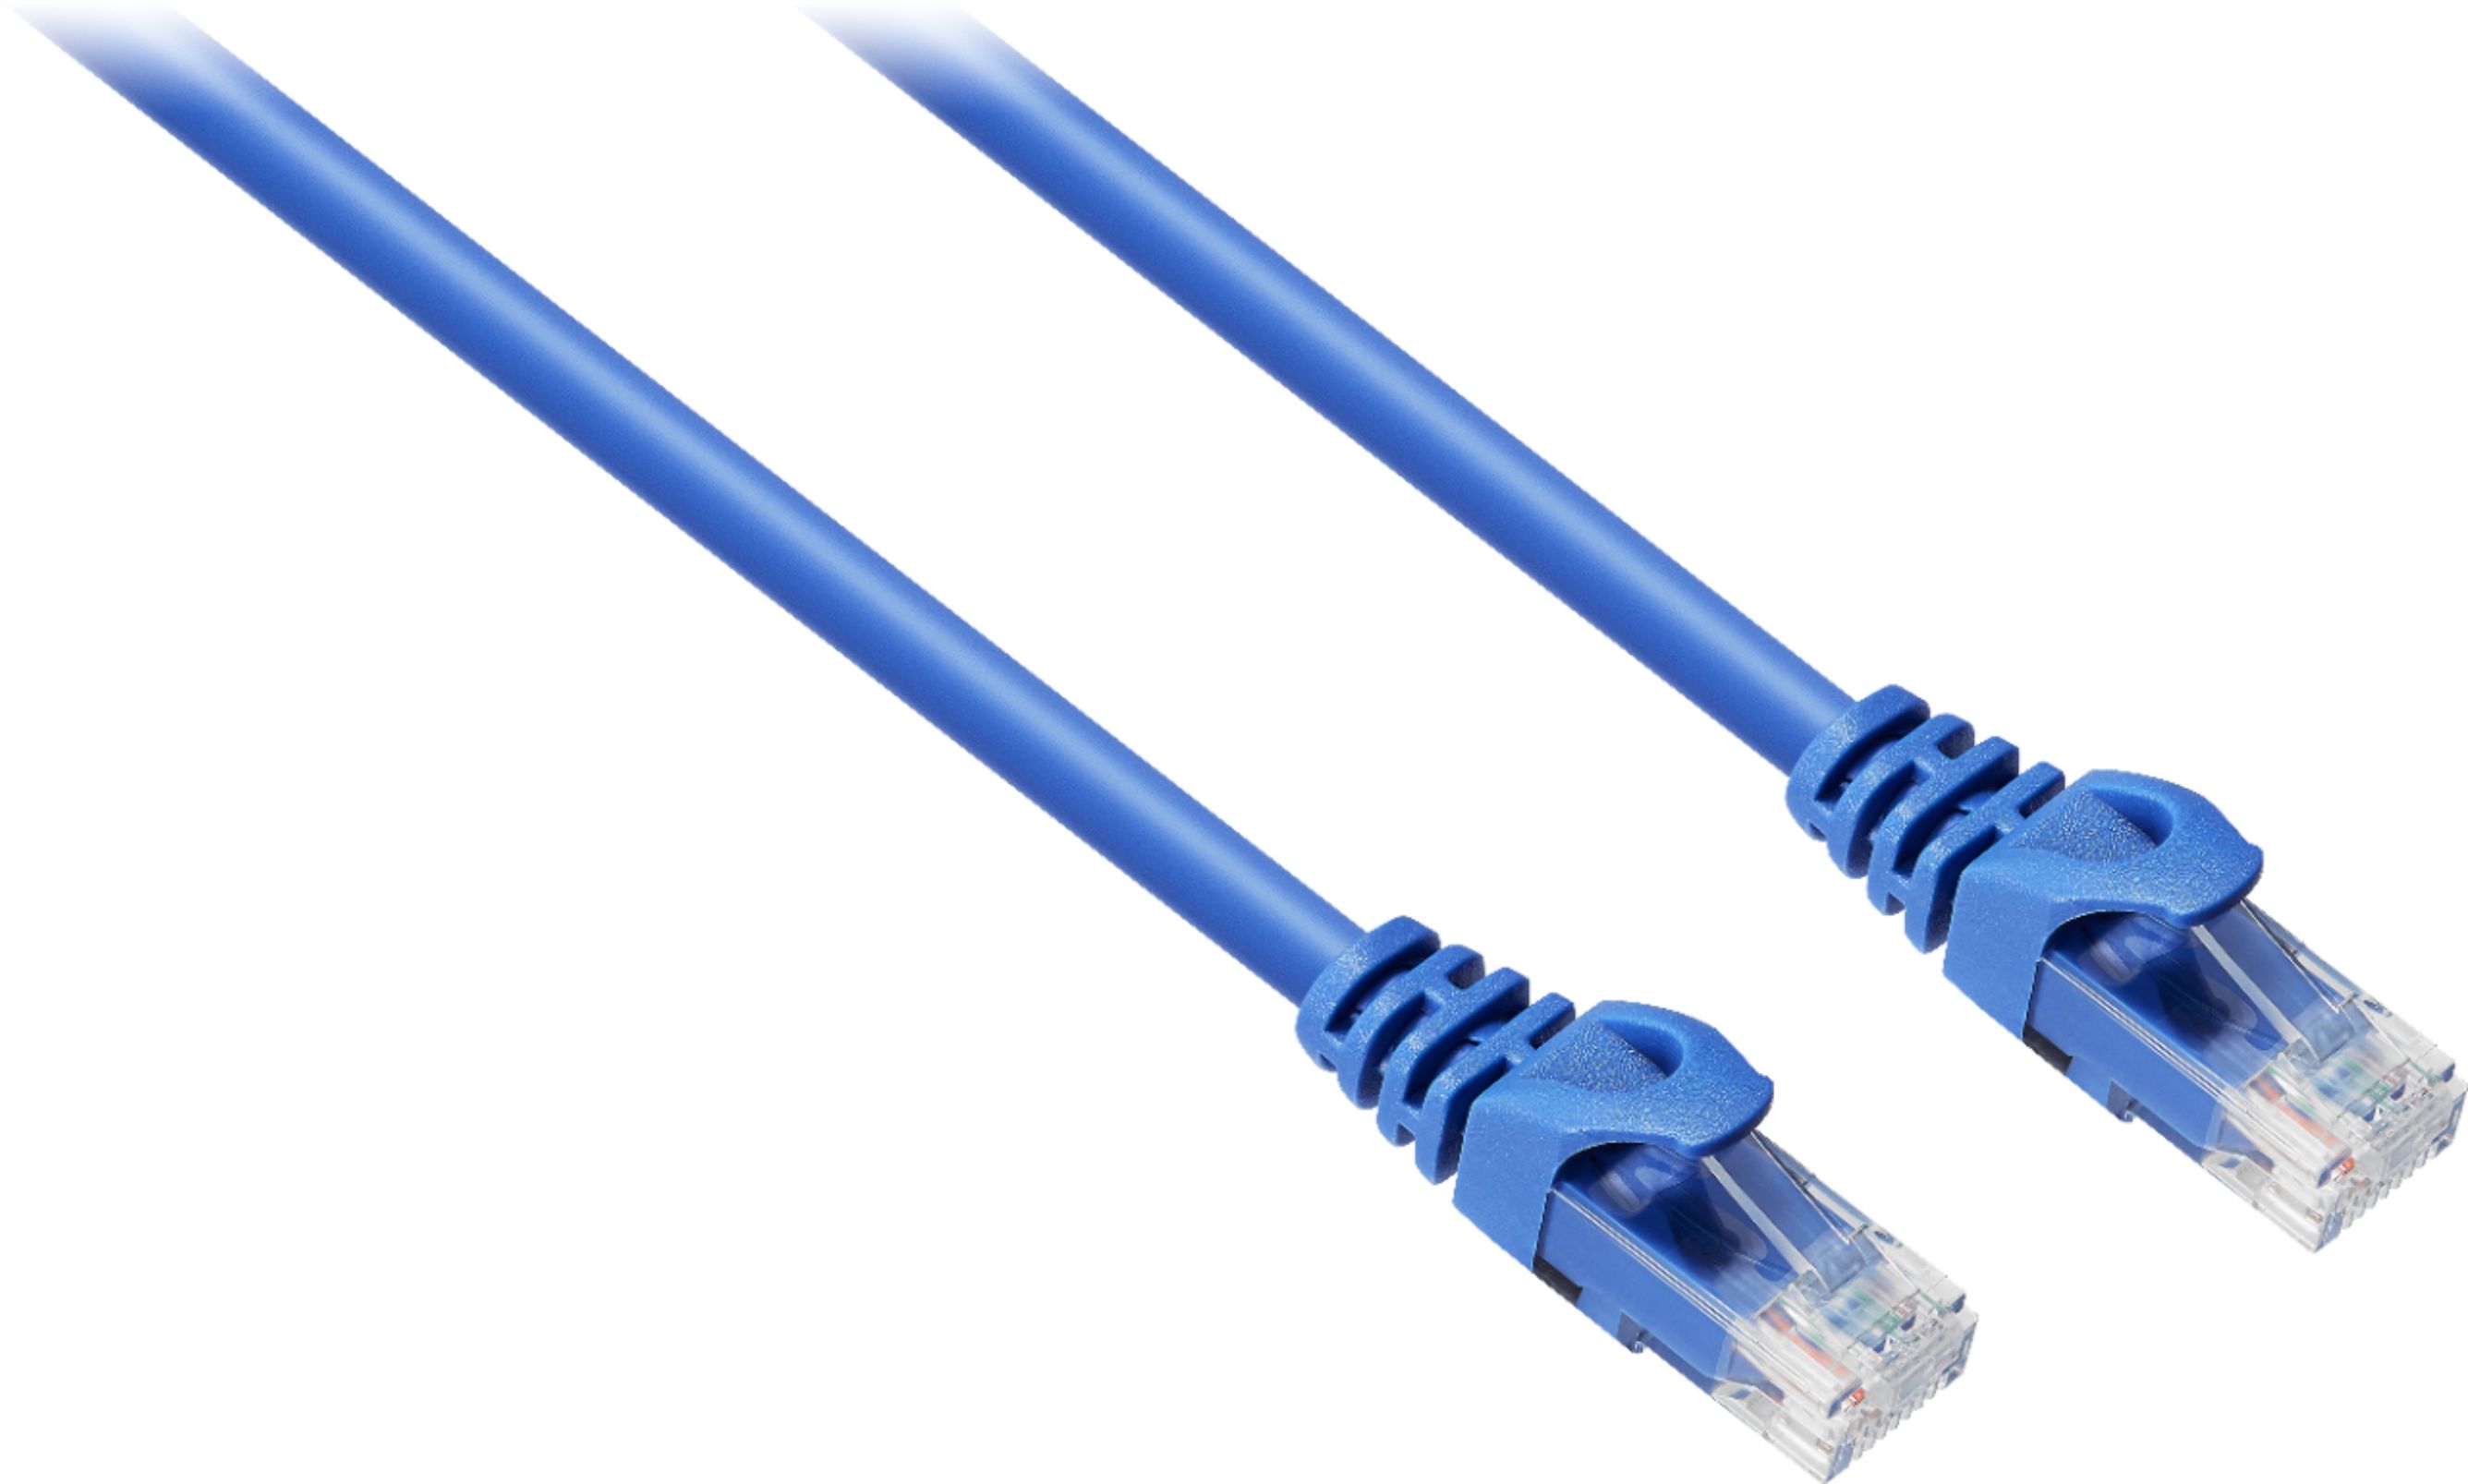 Ethernet Gigabit Switch - Best Buy